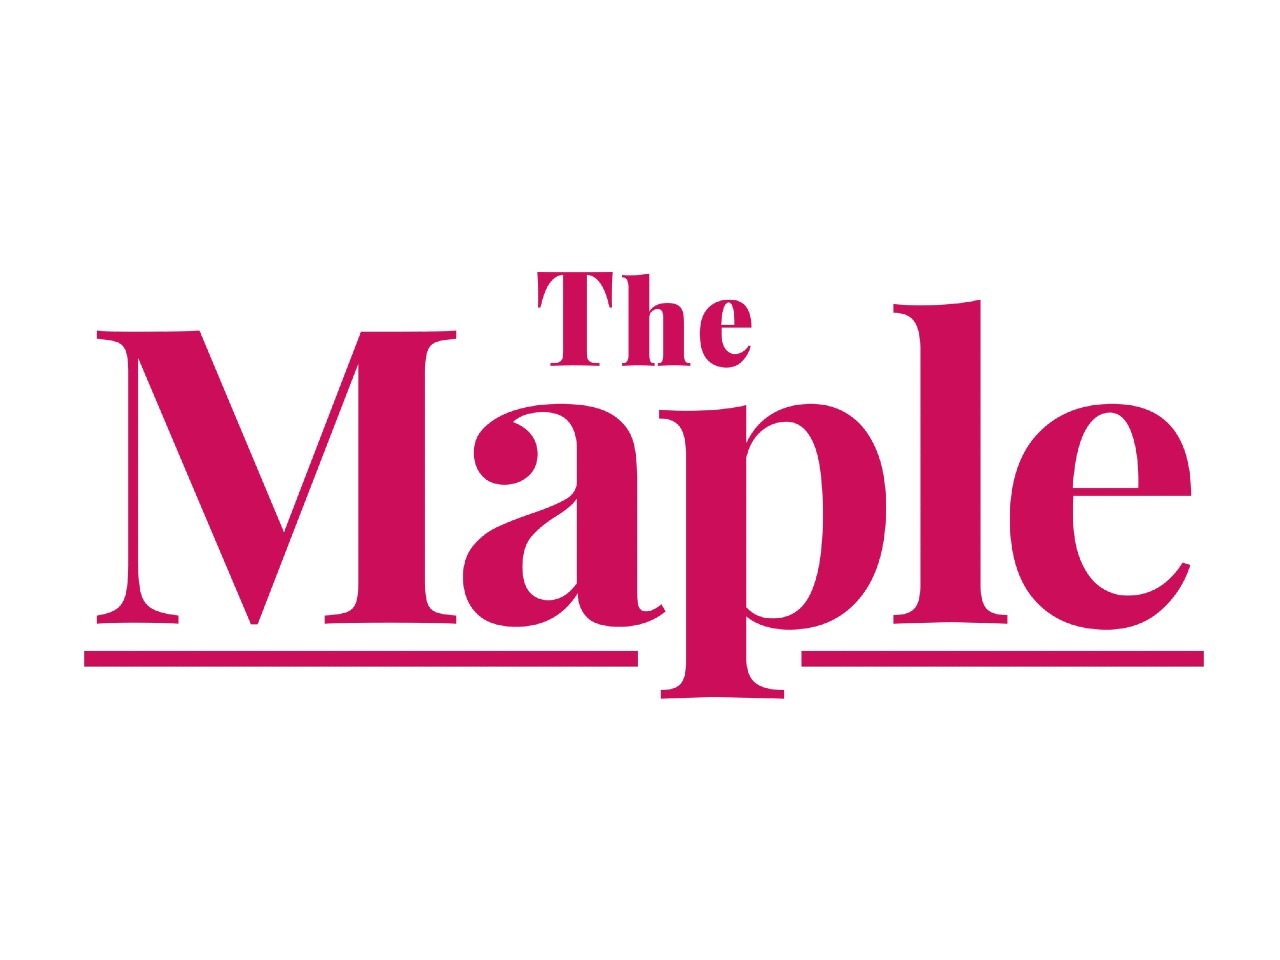 The new logo for The Maple newsletter